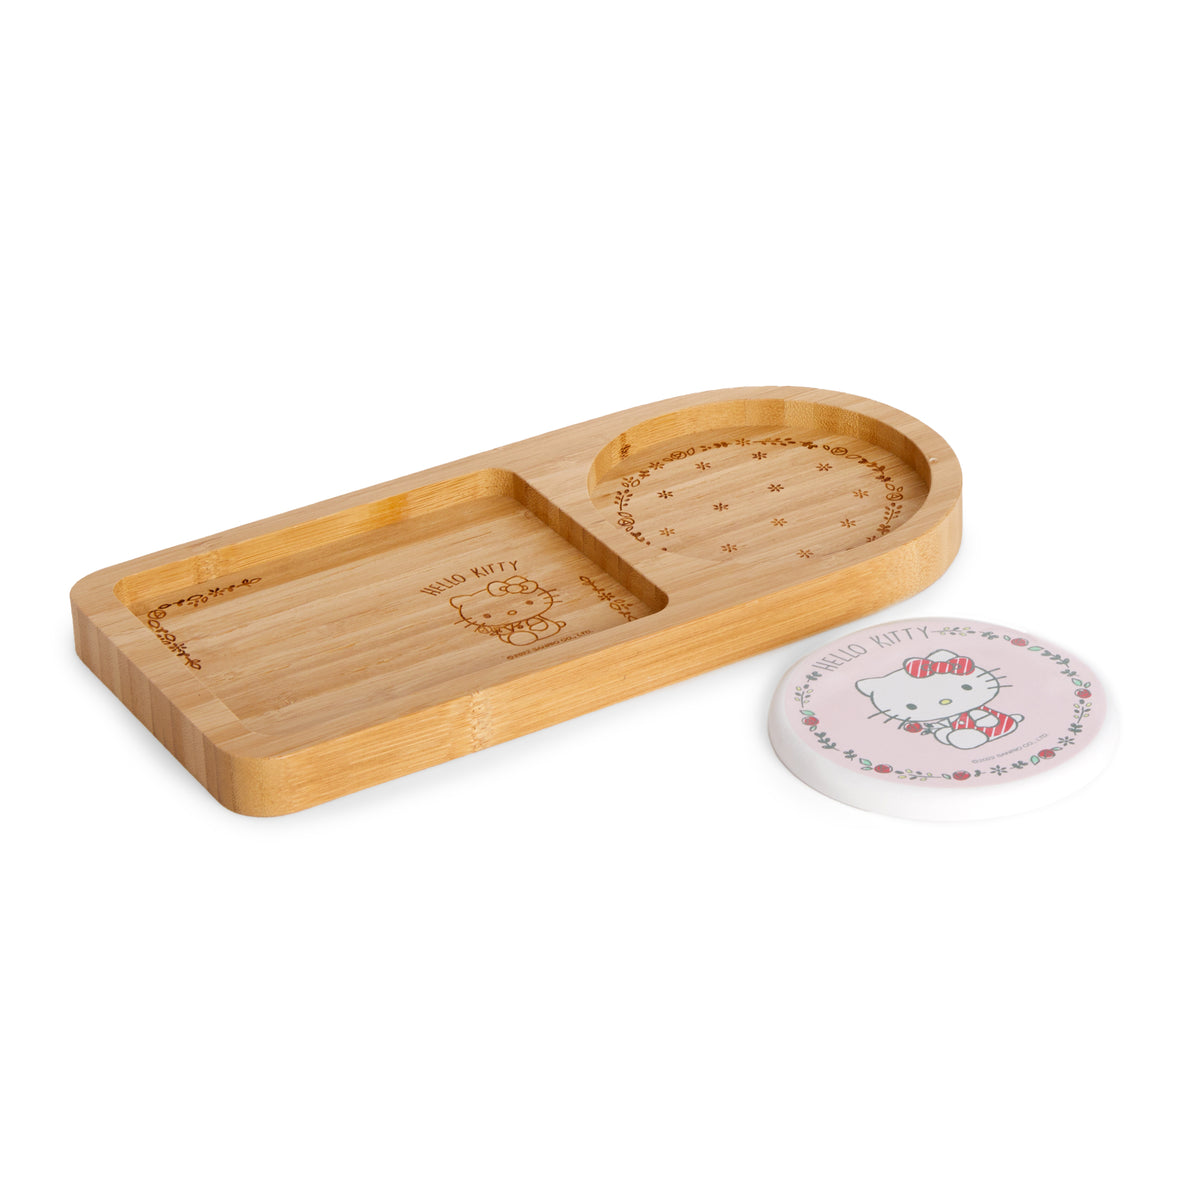 Hello Kitty Bamboo Tray and Coaster Set Home Goods Global Original   